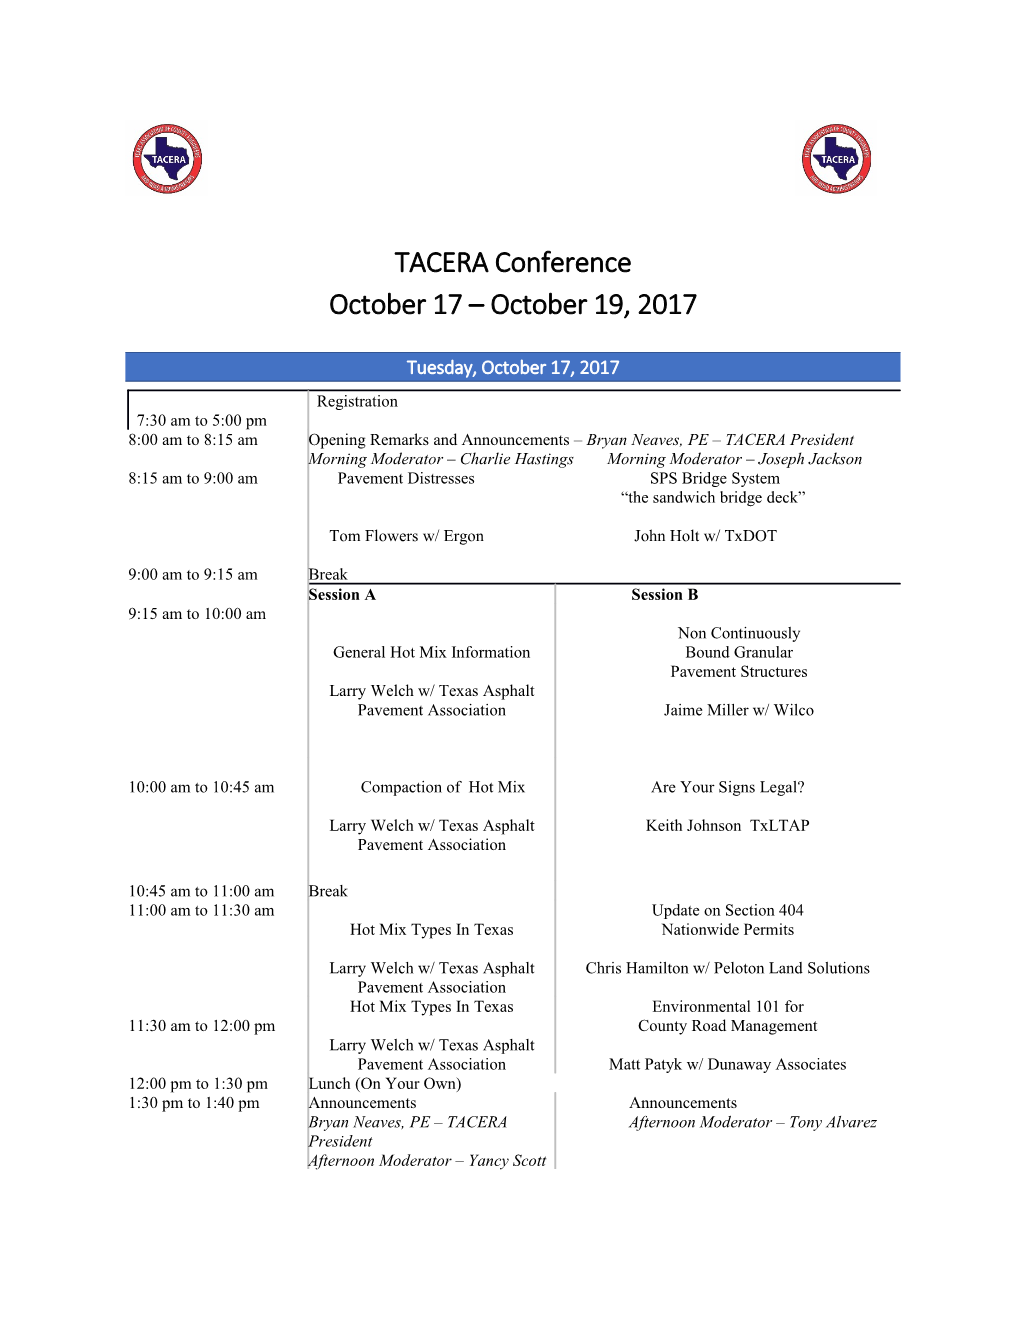 TACERA Conference October 17 October 19, 2017